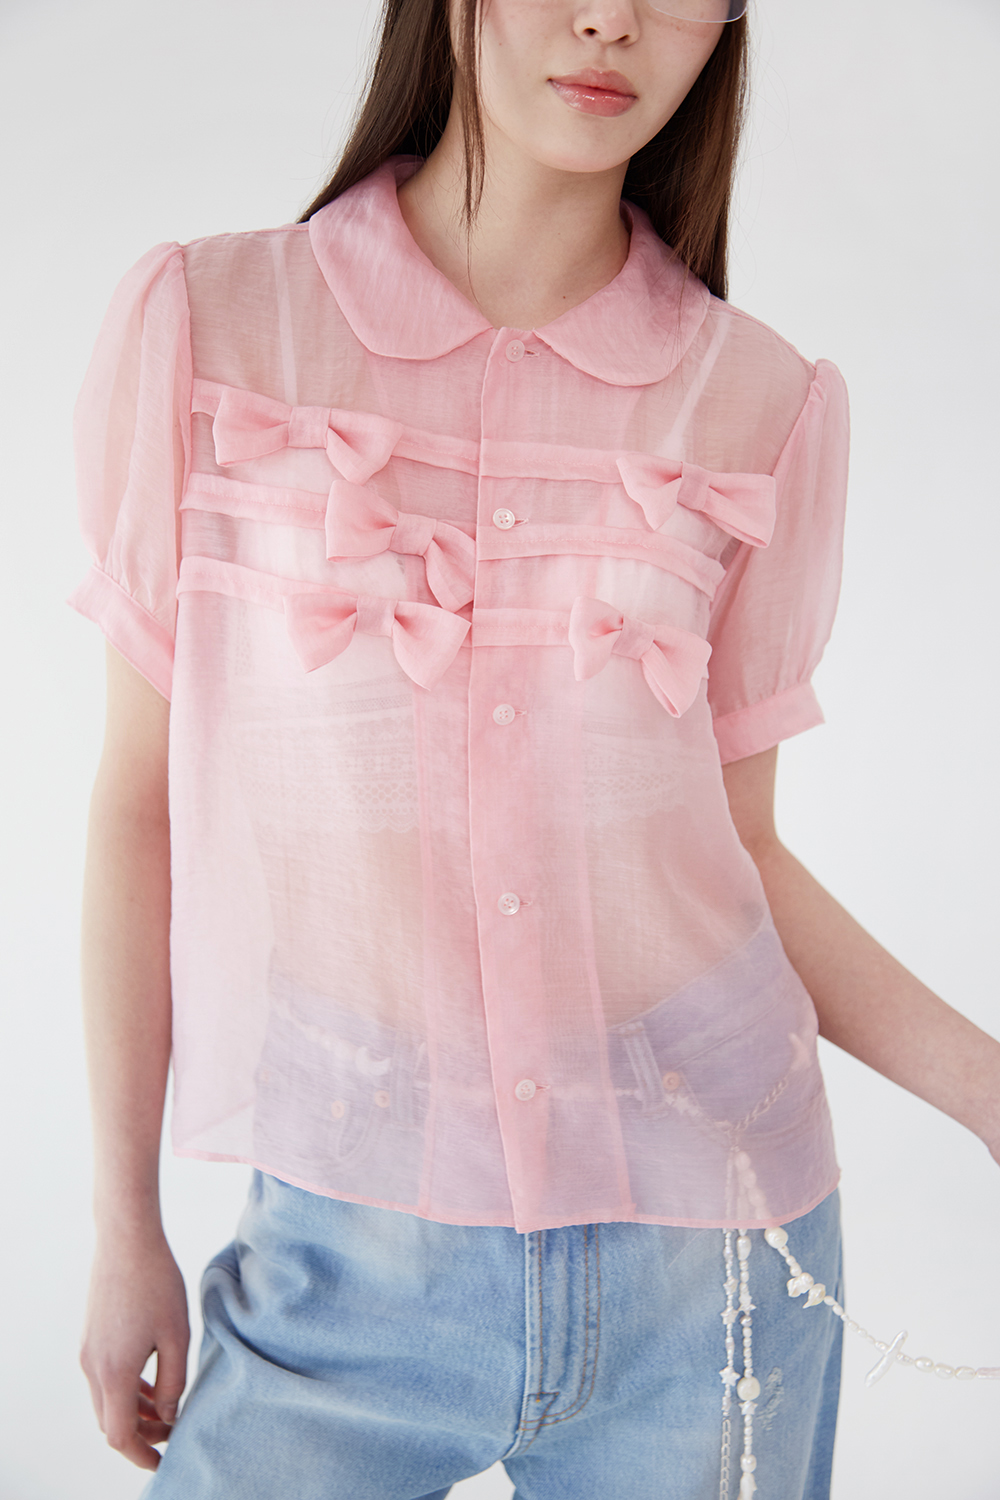 Annabelle ribbon blouse (Pink) / 4월15일 이내 출고